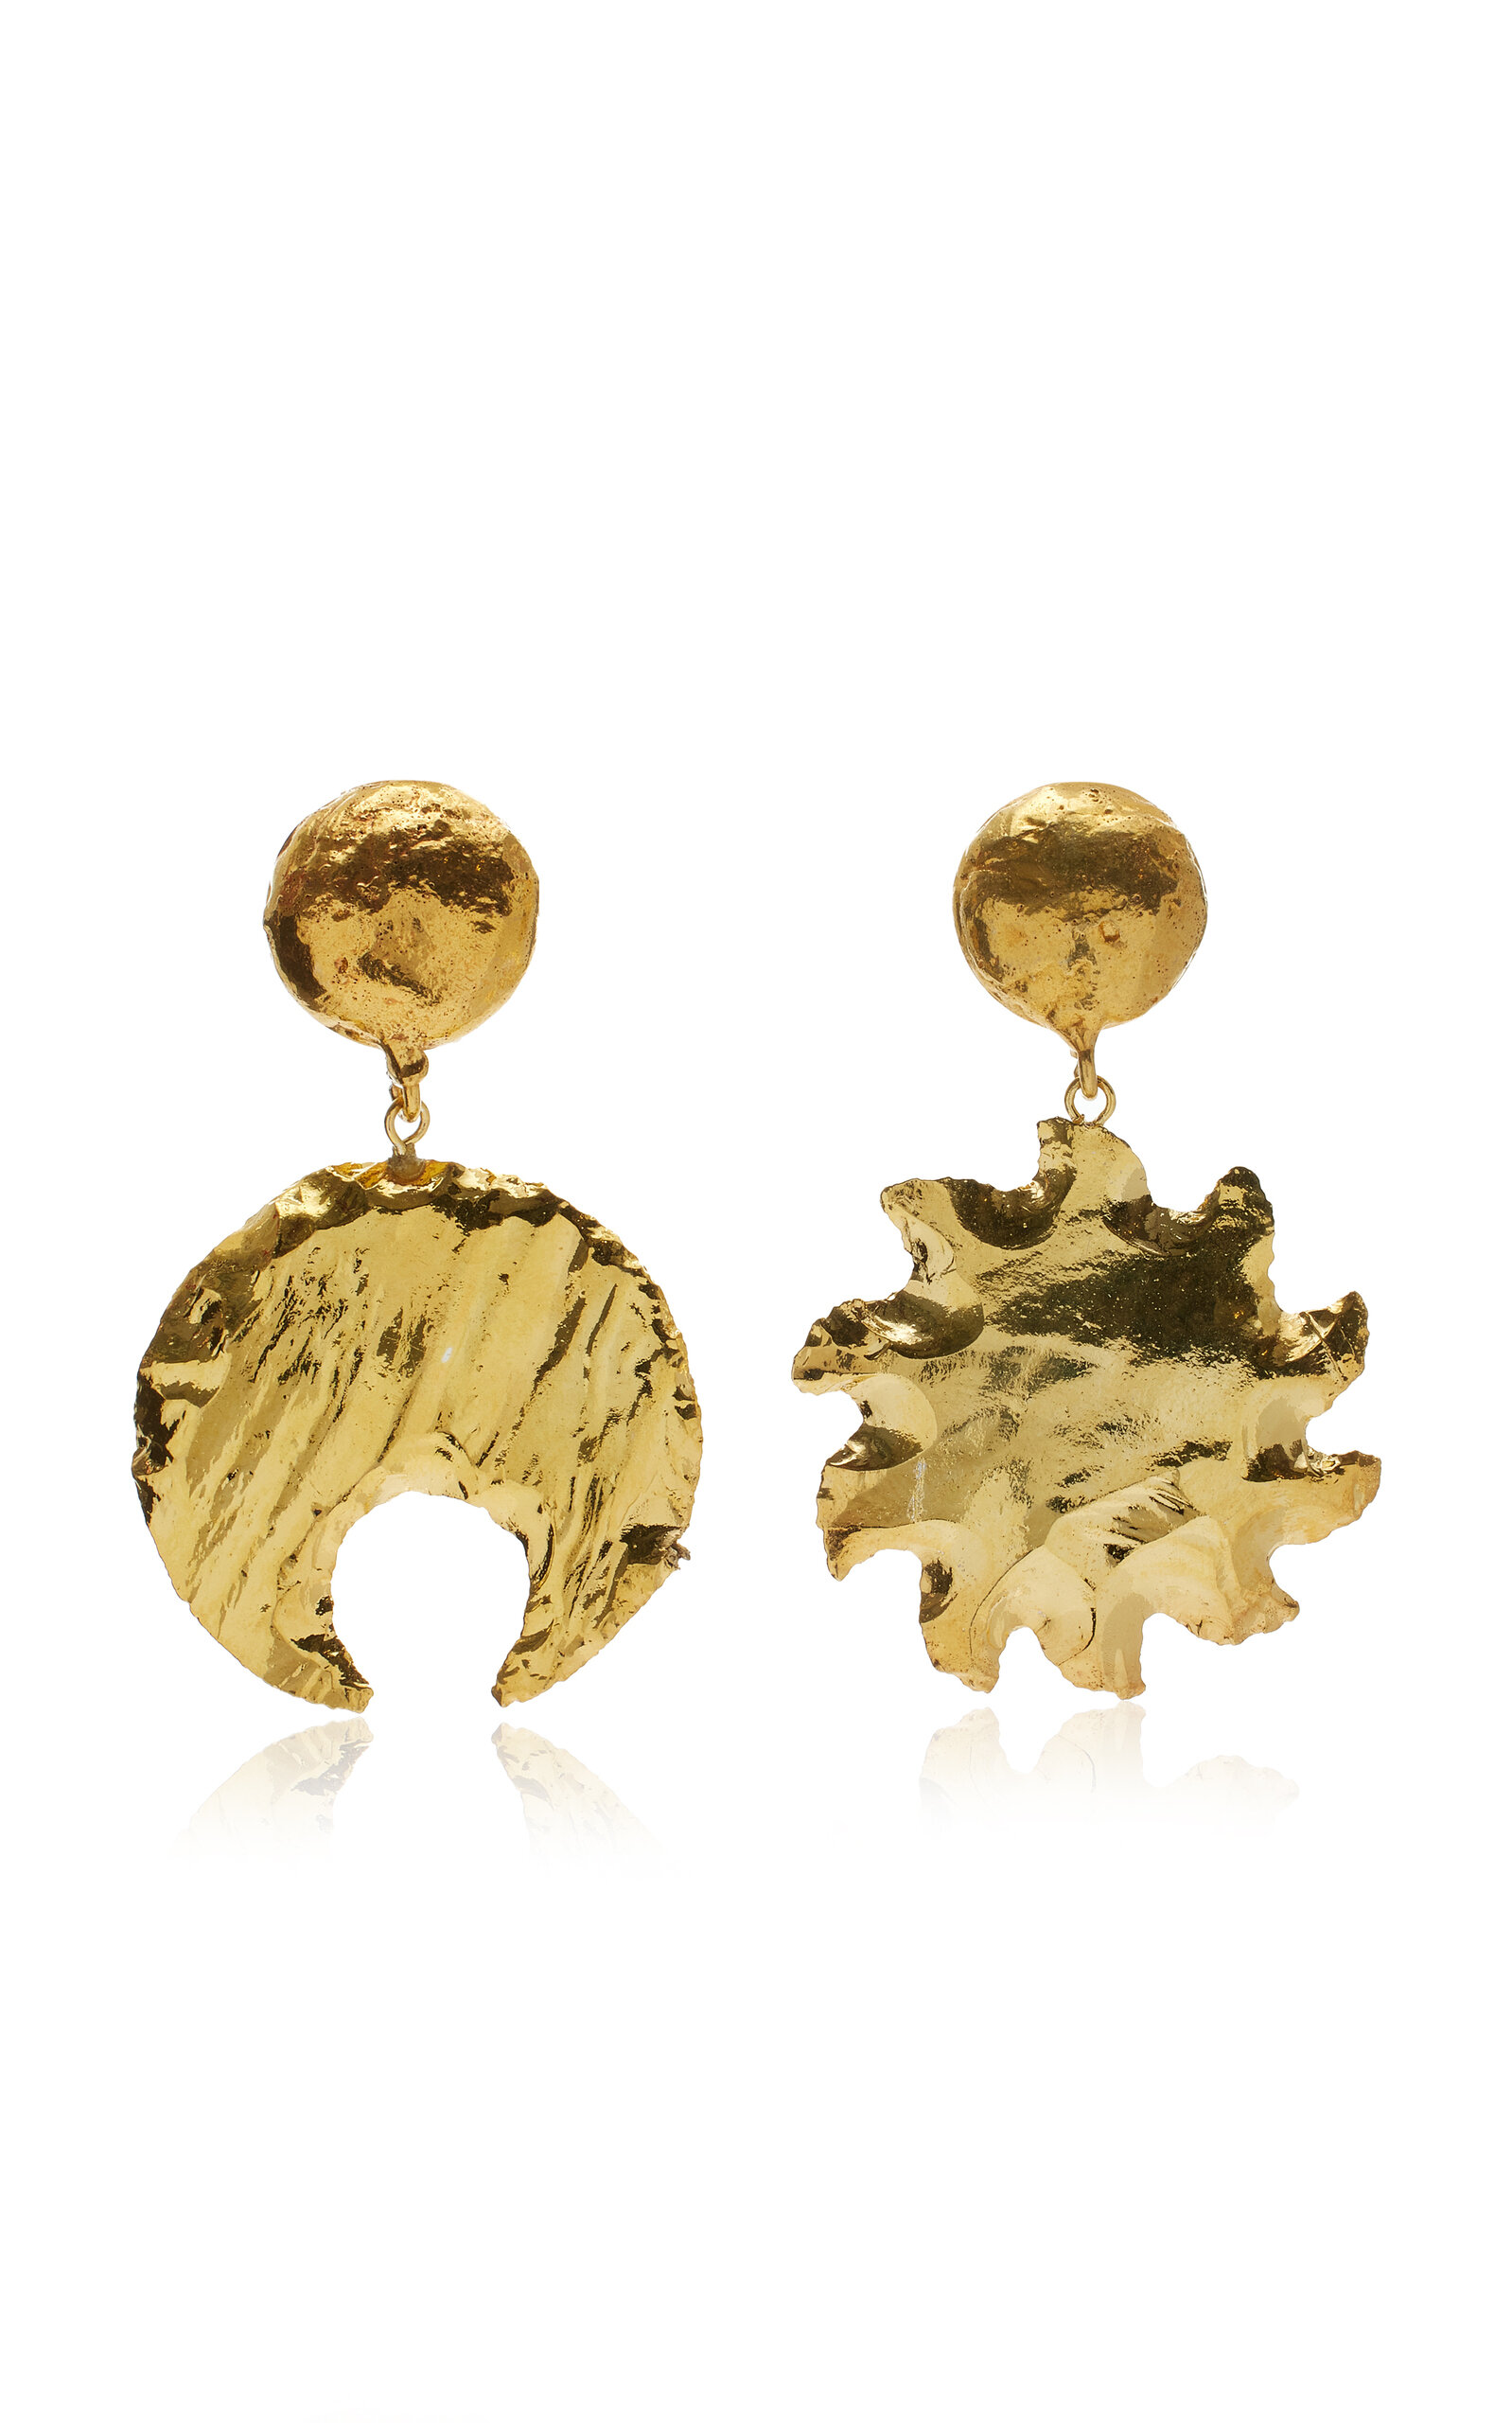 Sol y Luna 22K Gold-Plated Earrings